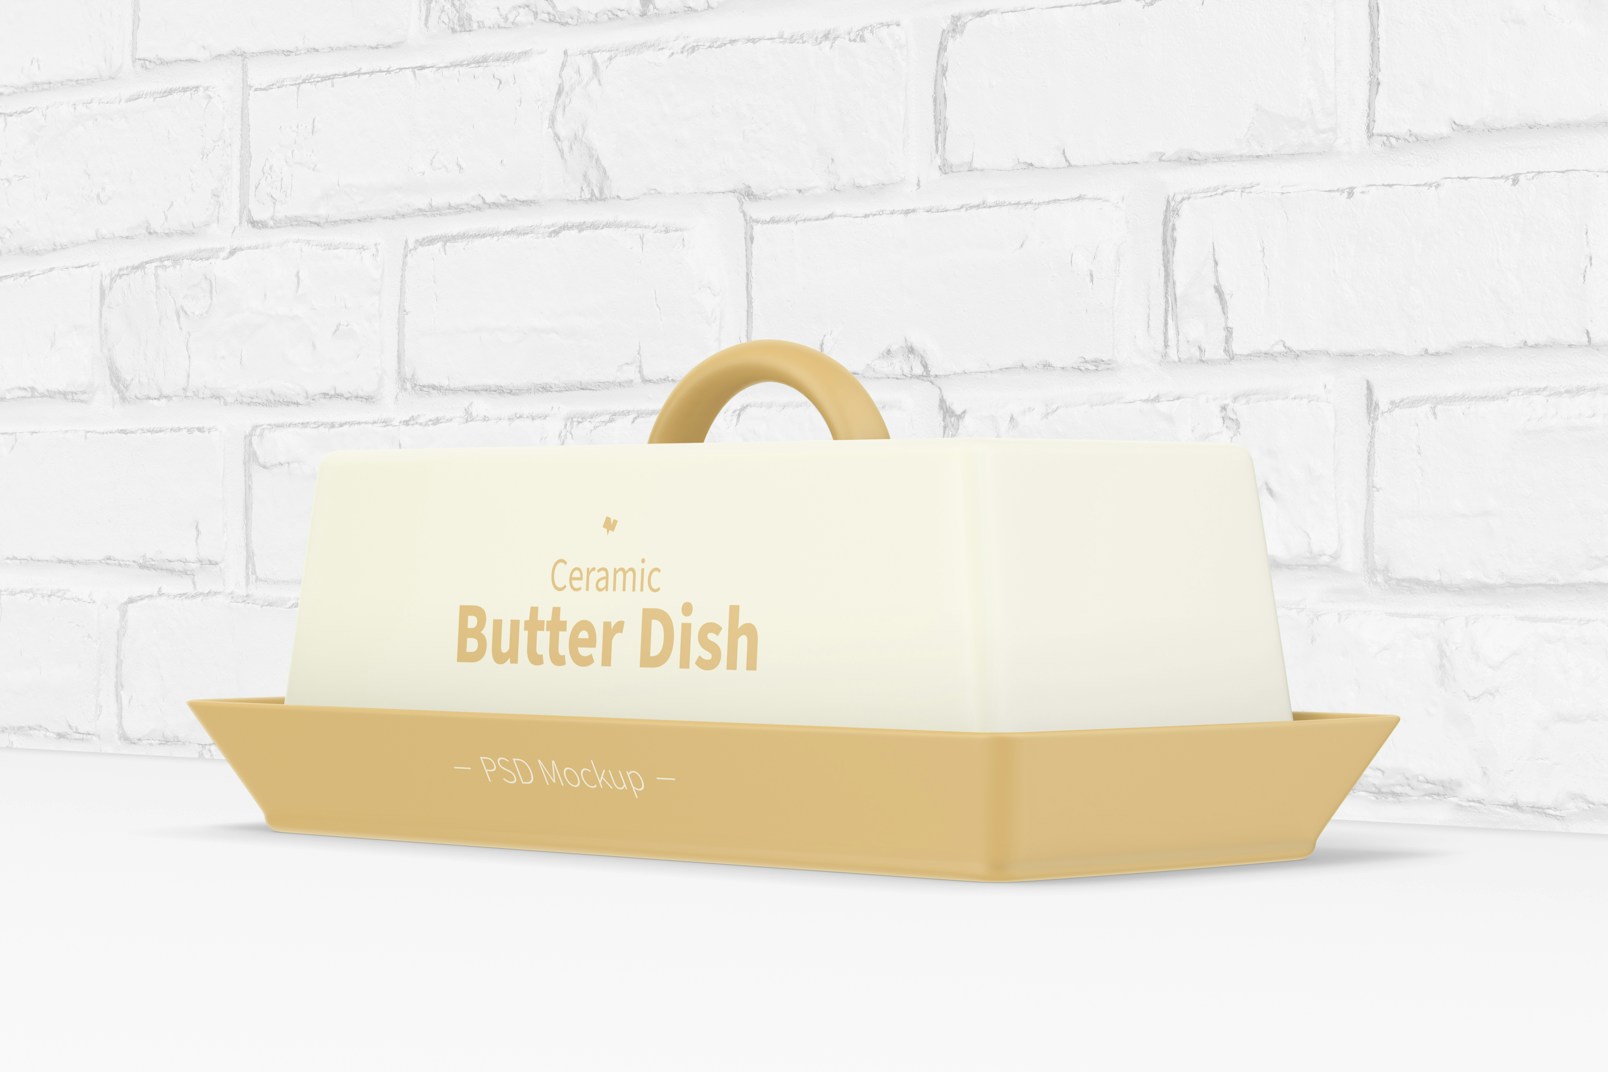 Ceramic Butter Dish Mockup, Perspective